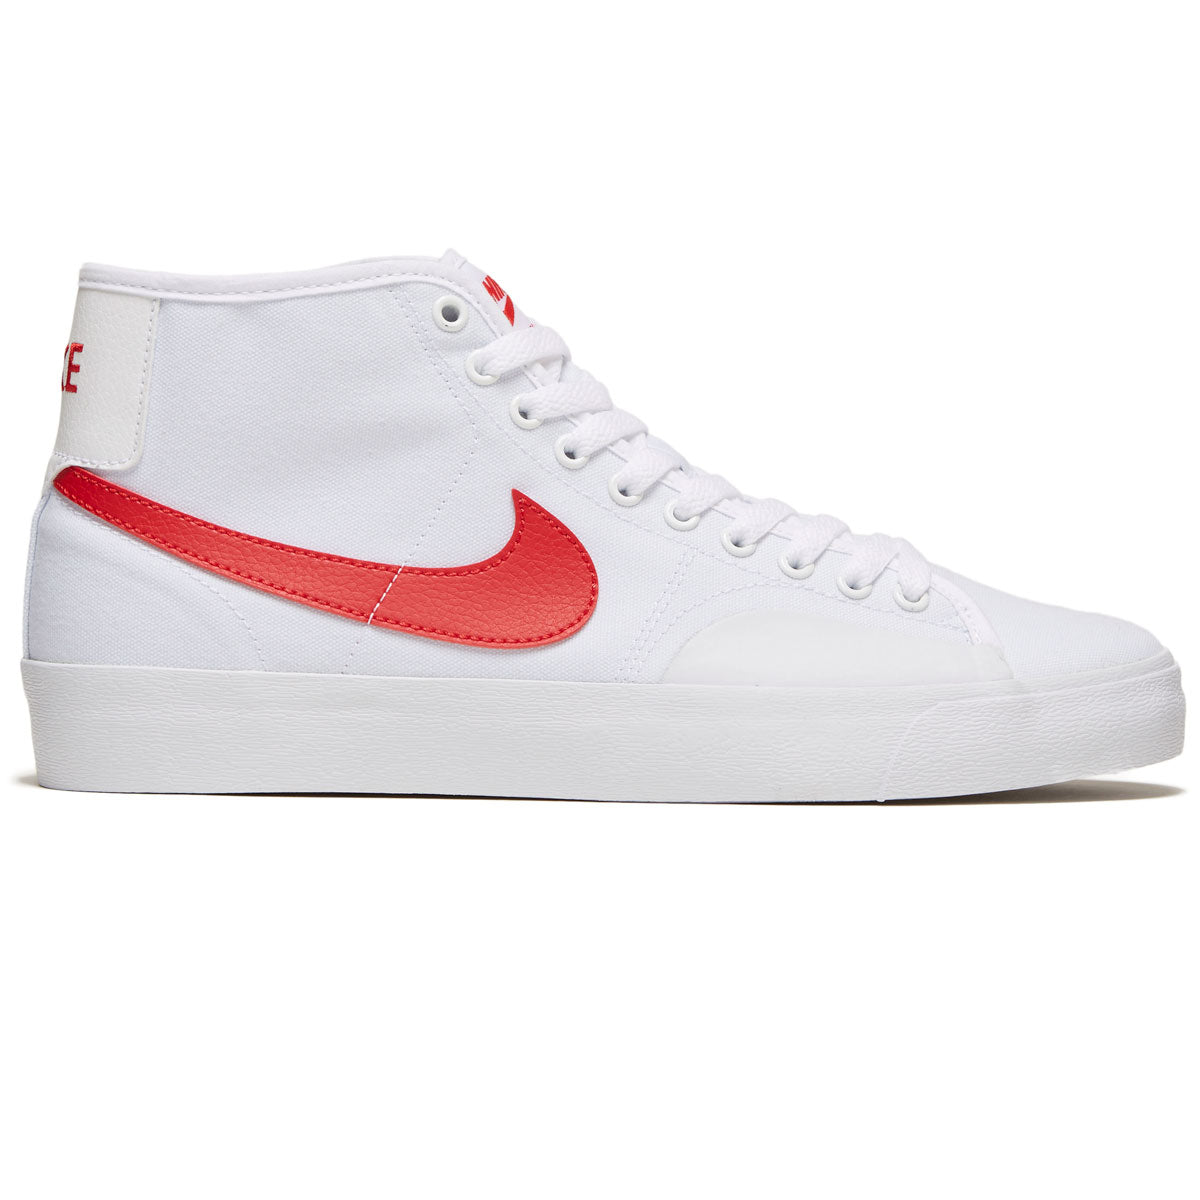 Sluit een verzekering af Kalmerend Activeren Nike SB Blazer Court Mid Shoes - White/University Red/White – CCS